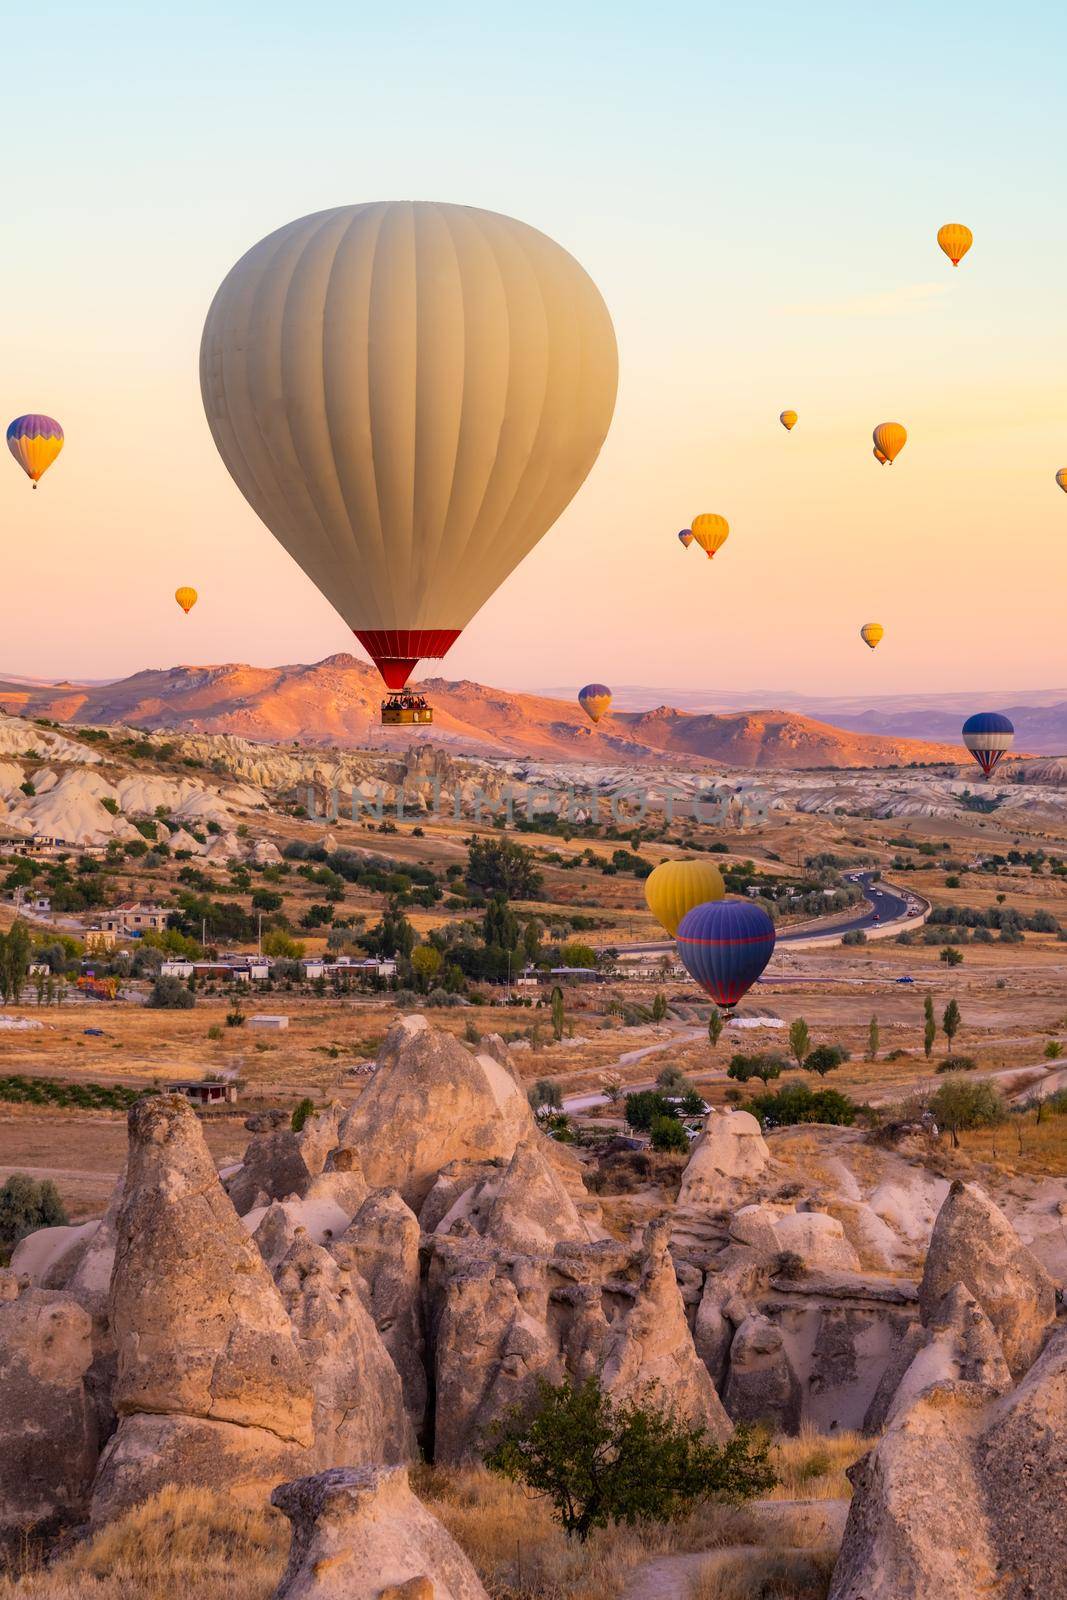 Hot air balloons over Cappadocia, Turkey by GekaSkr